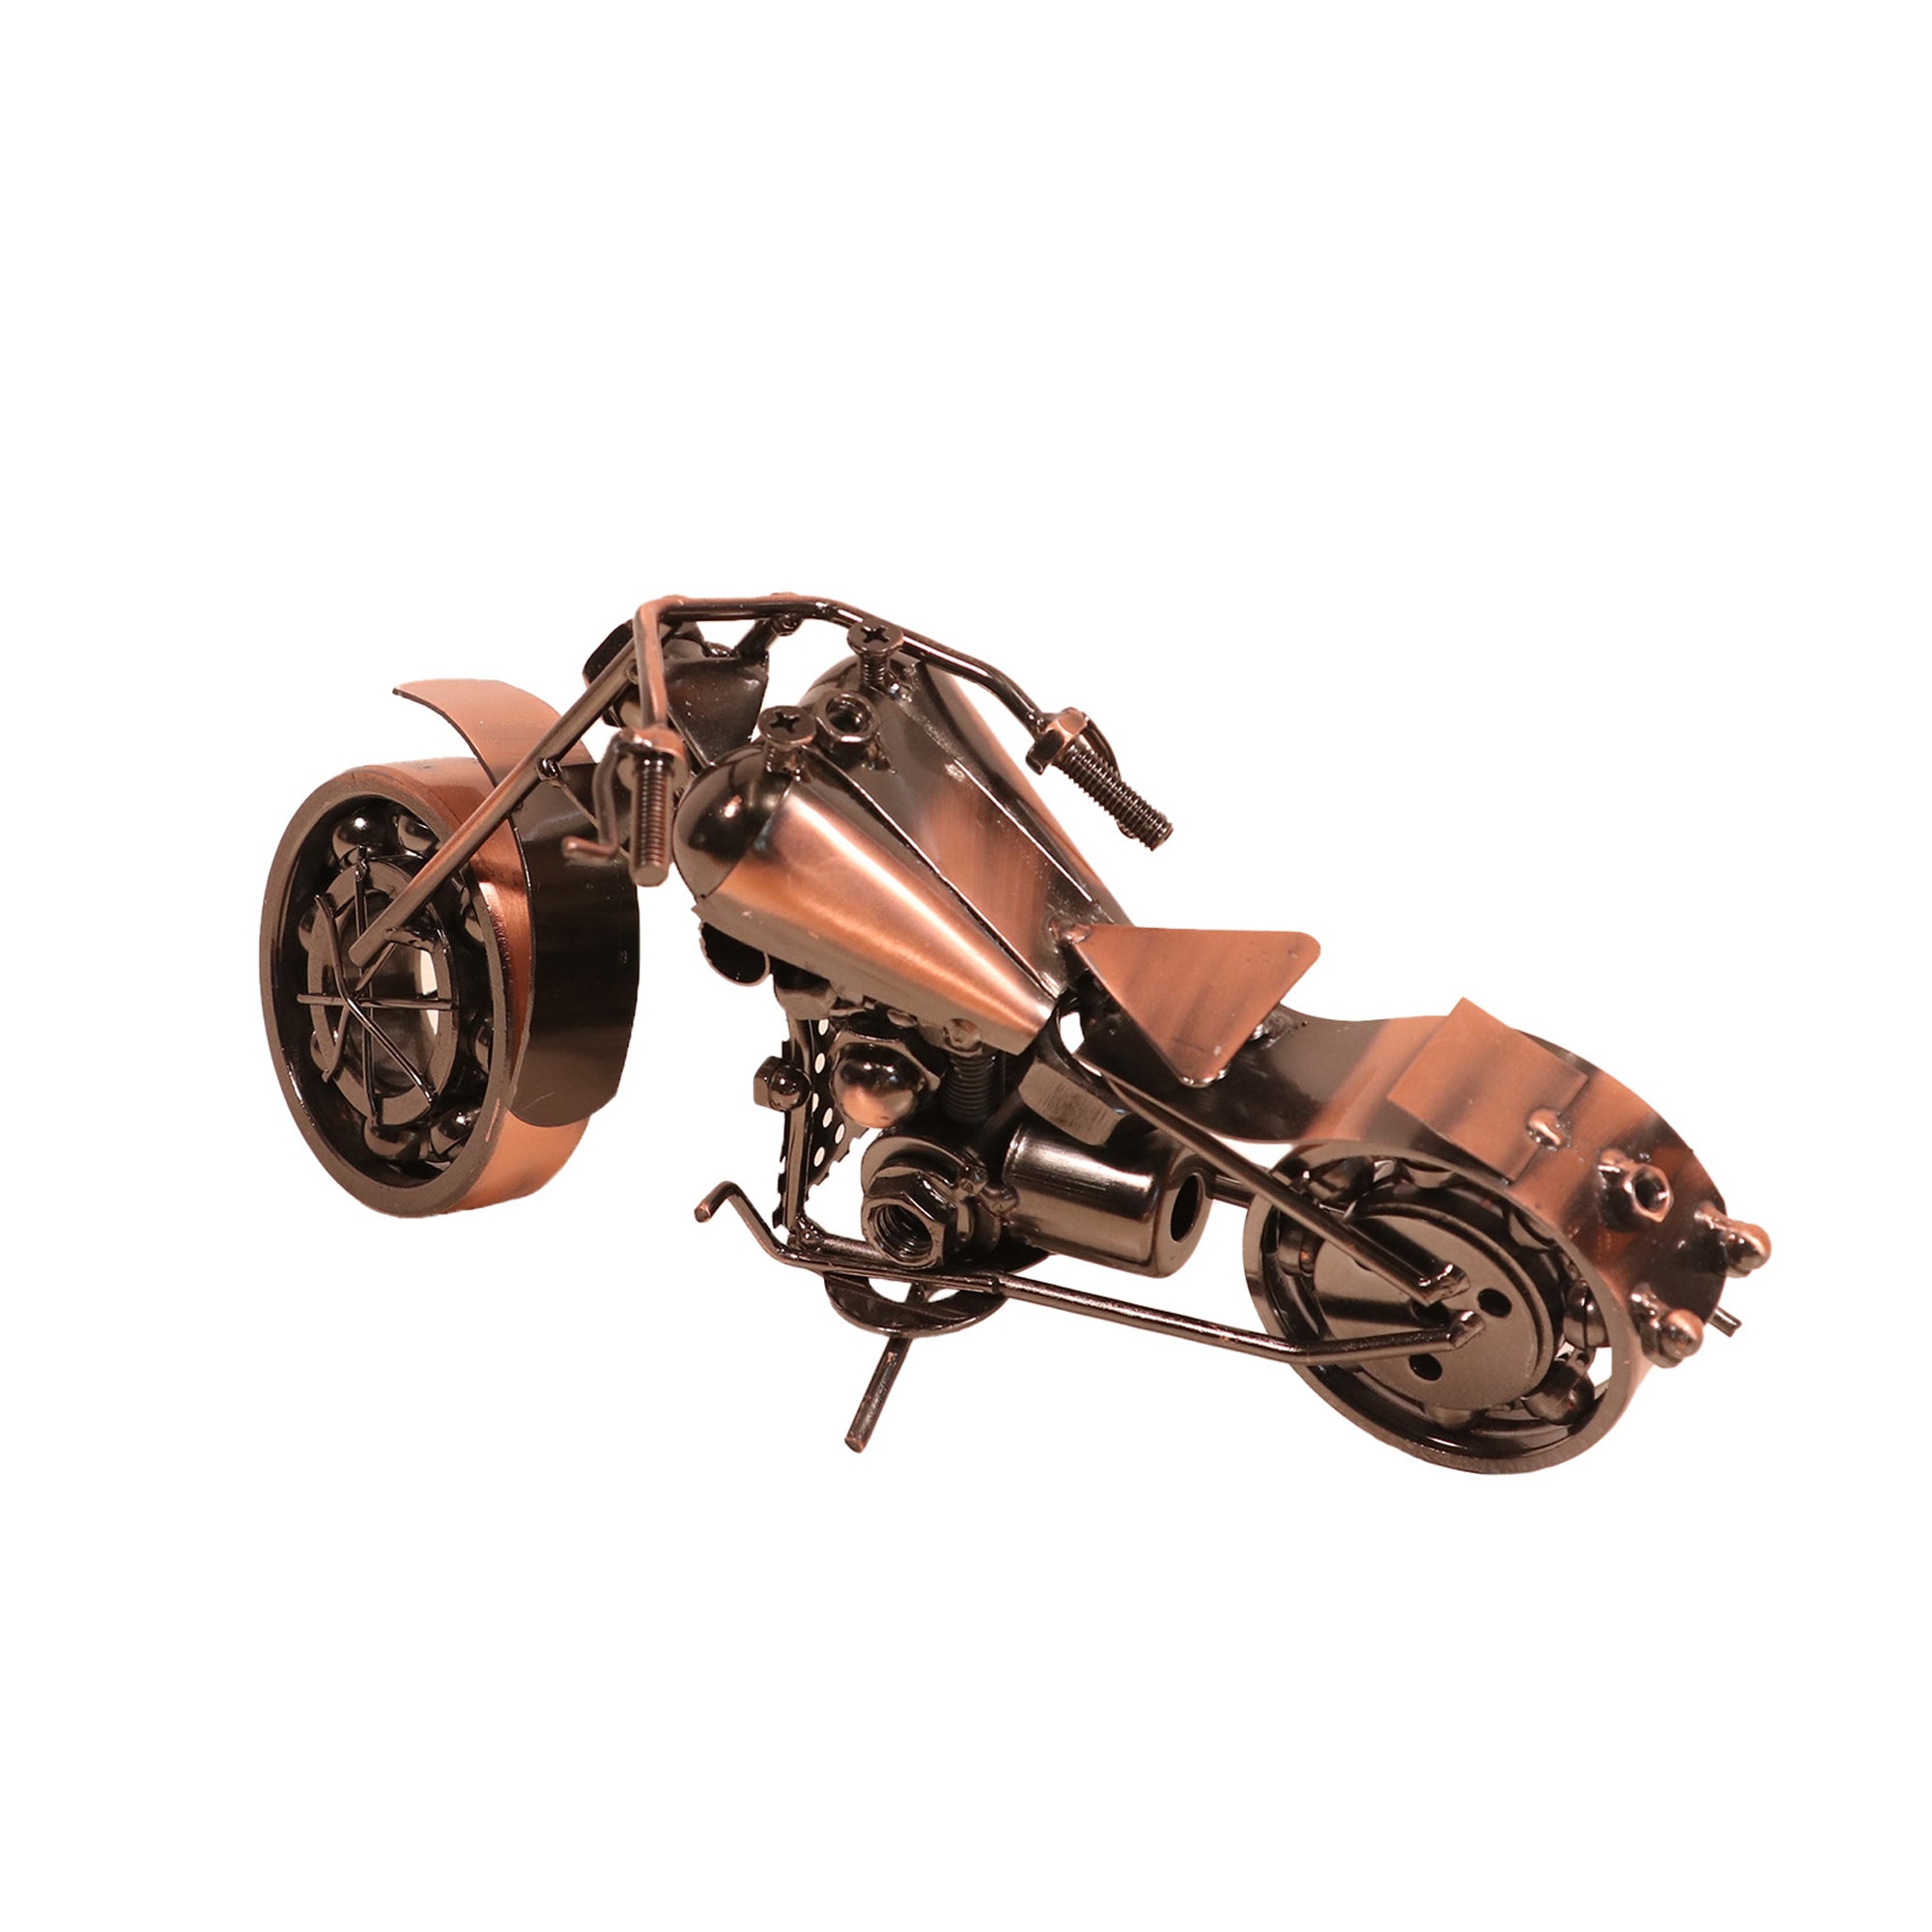 Flaming Metal Bike Vehicle figurine